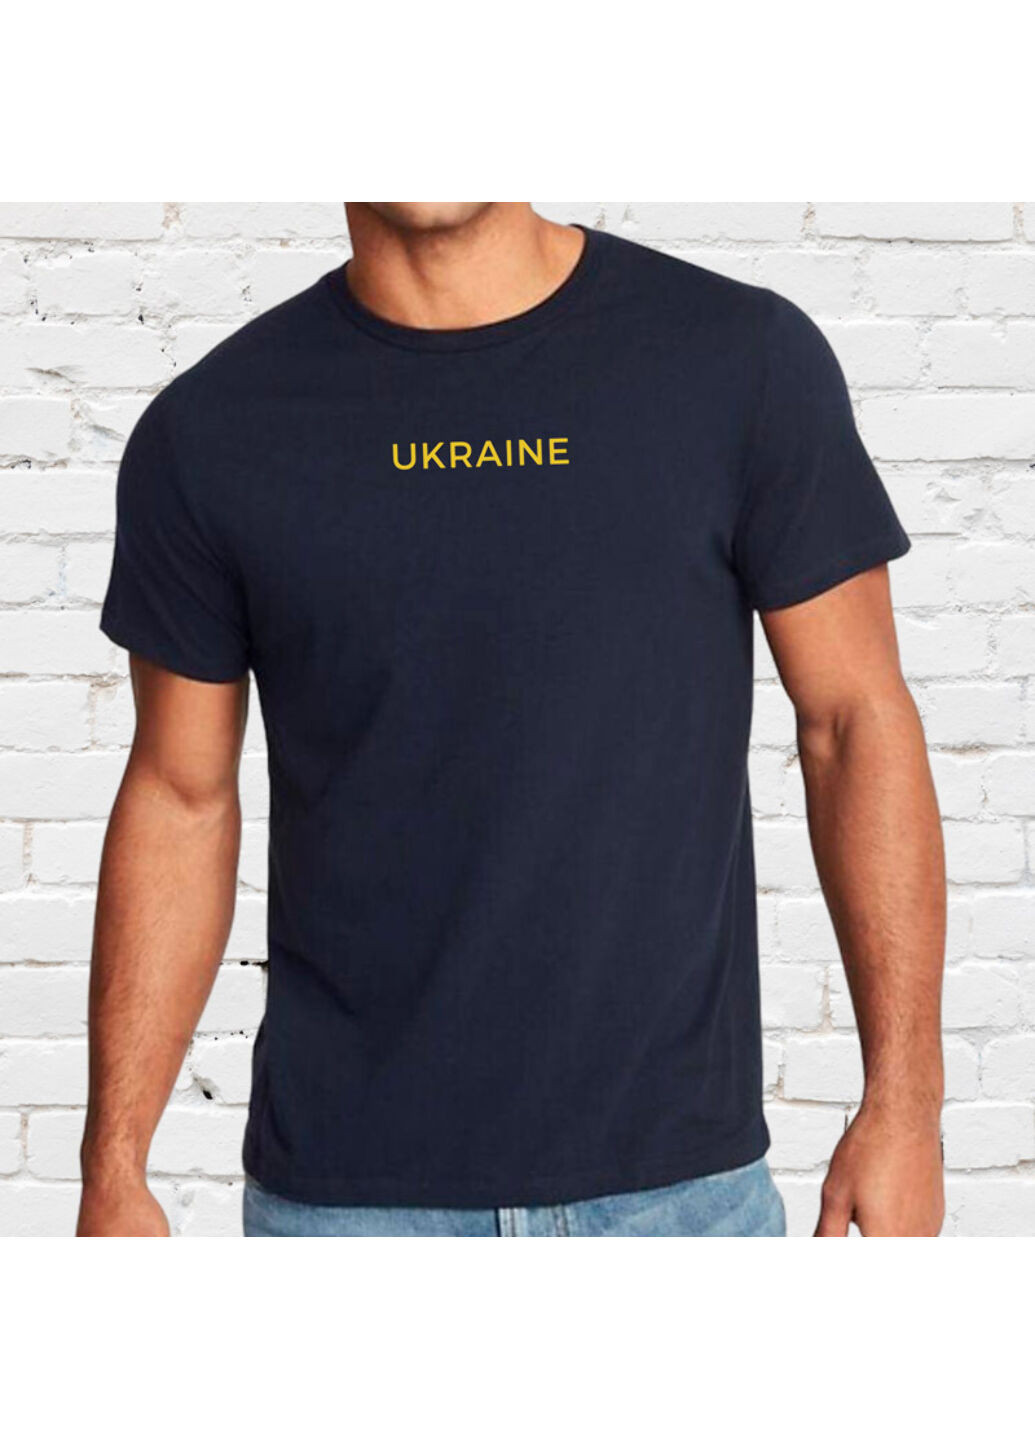 Чорна футболка з вишивкою ukraine чоловіча чорний s No Brand